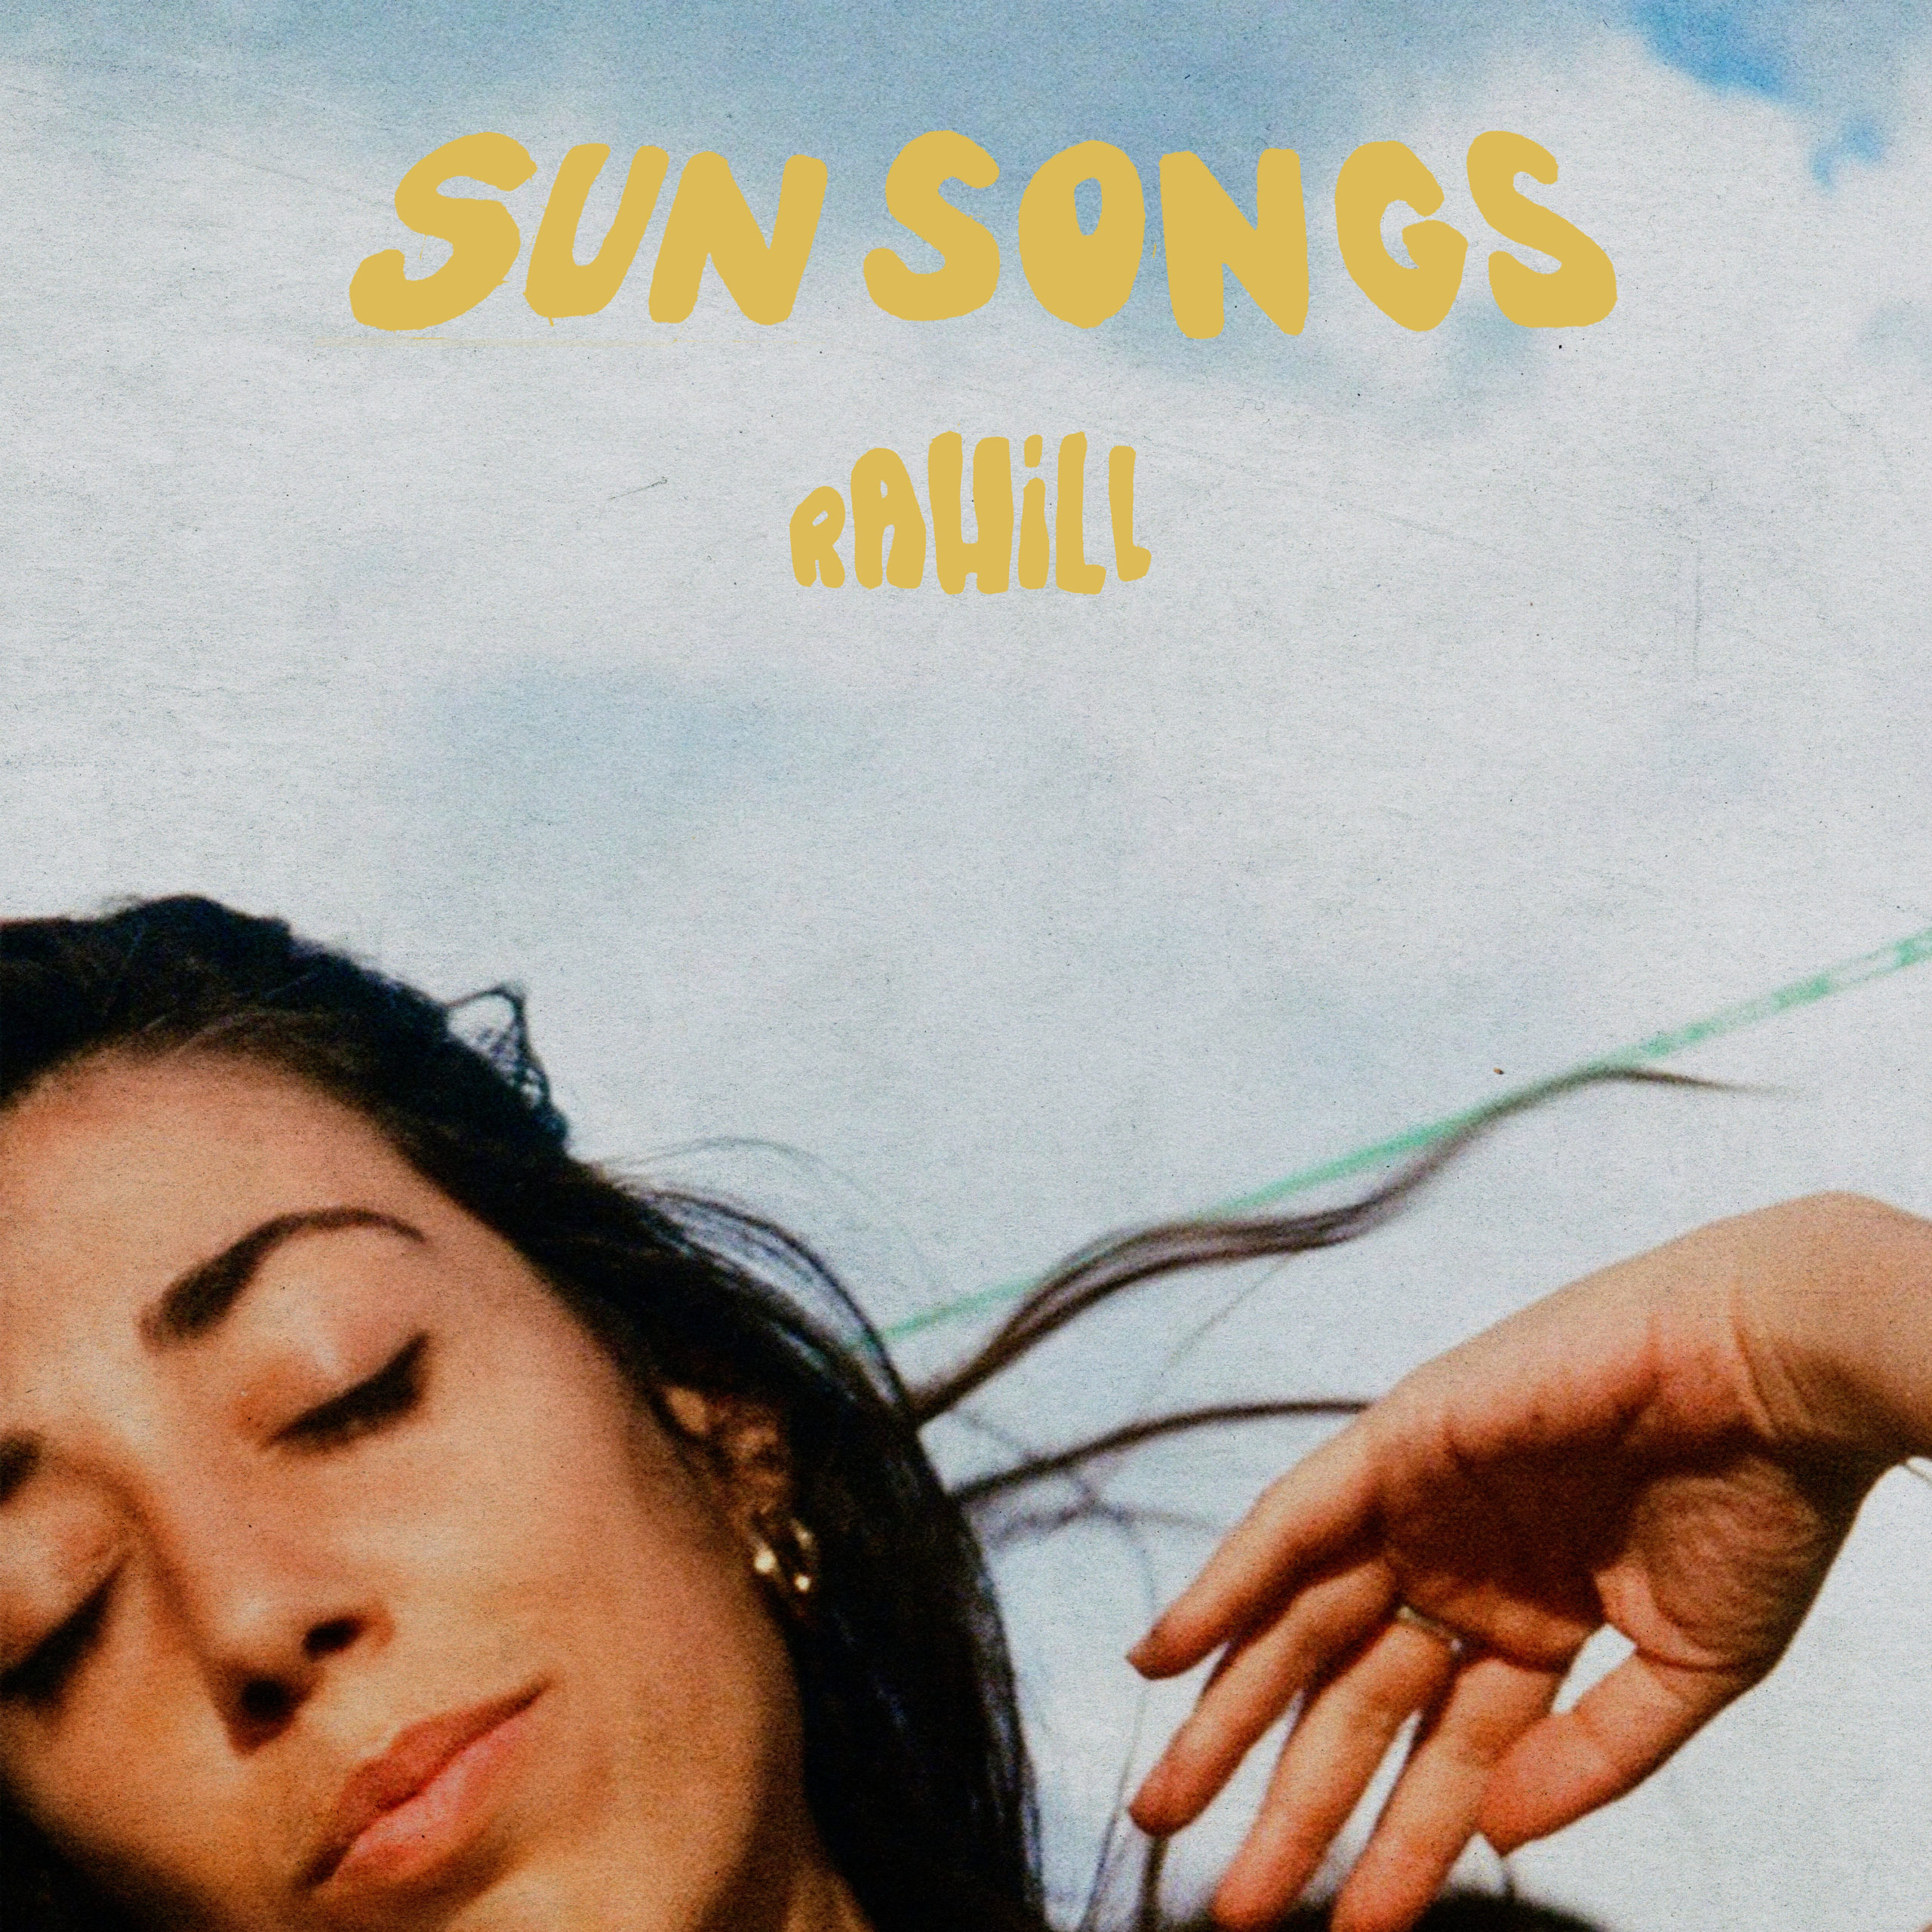 You are currently viewing L’artiste irano américaine Rahill annonce la sortie de 2 singles extraits de son EP solo « Sun Songs » via Big Dada, sous label de Ninja Tune, disponible le 4 novembre 2022